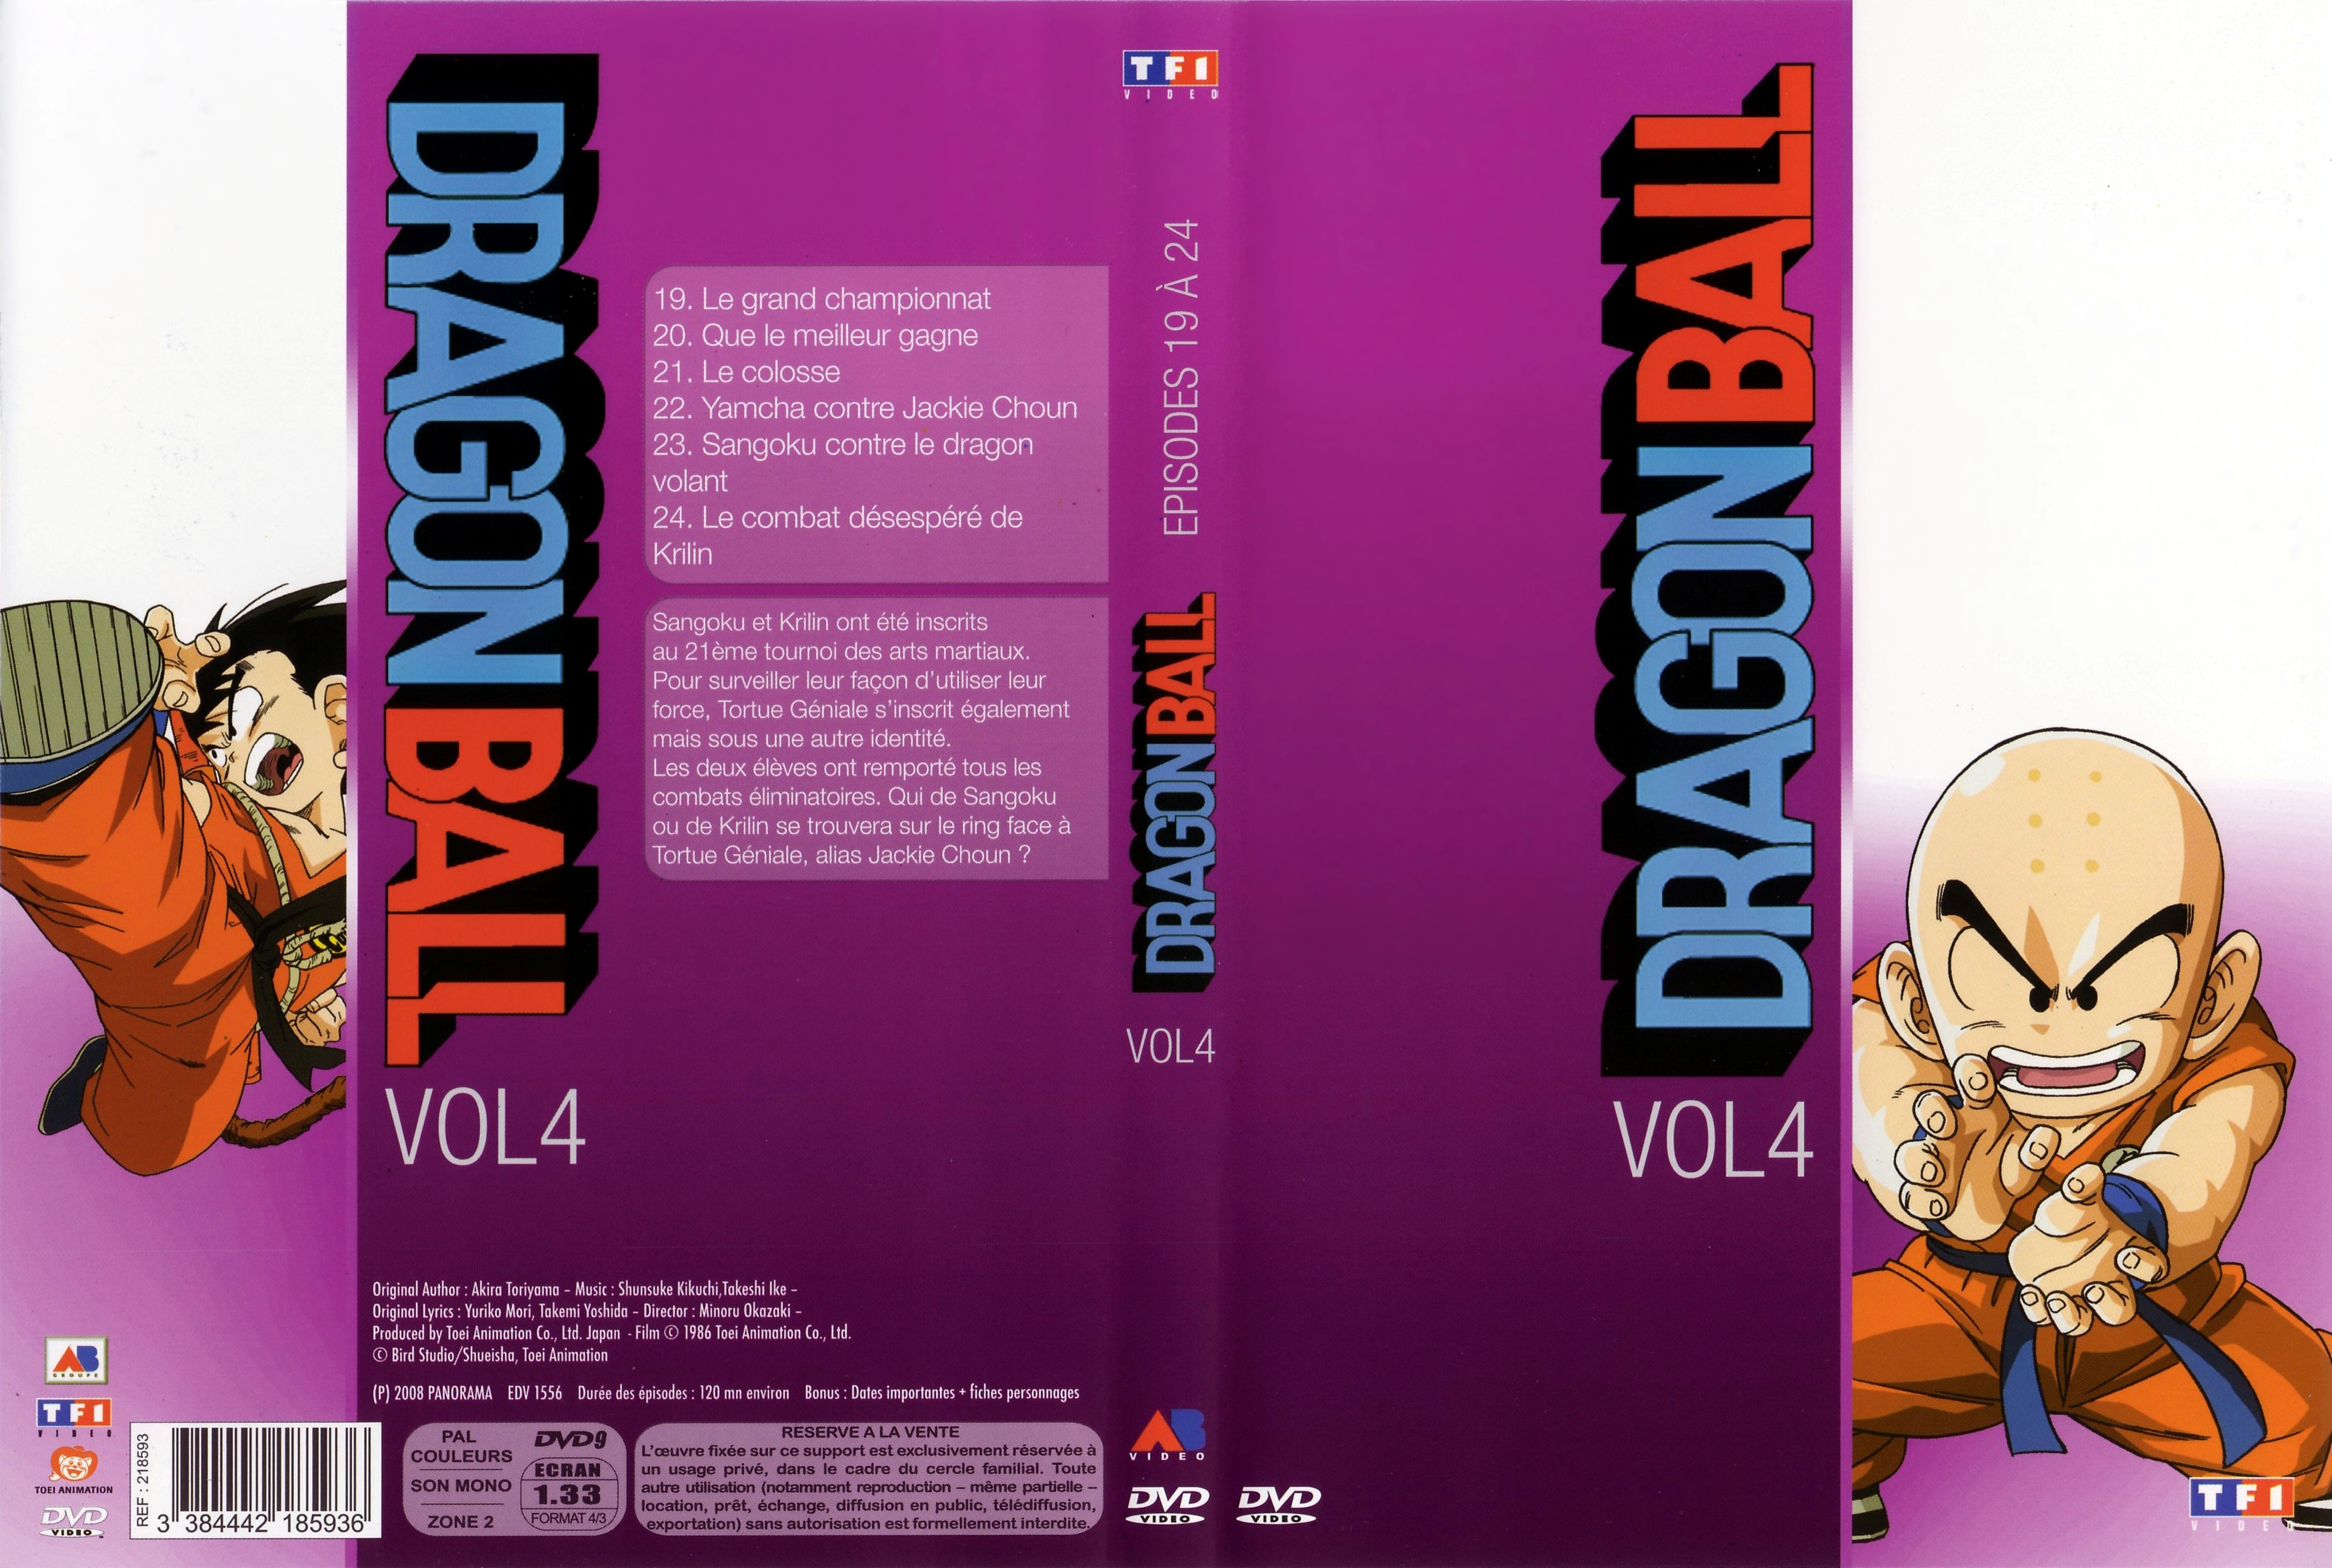 Jaquette DVD Dragon ball vol 04 v2